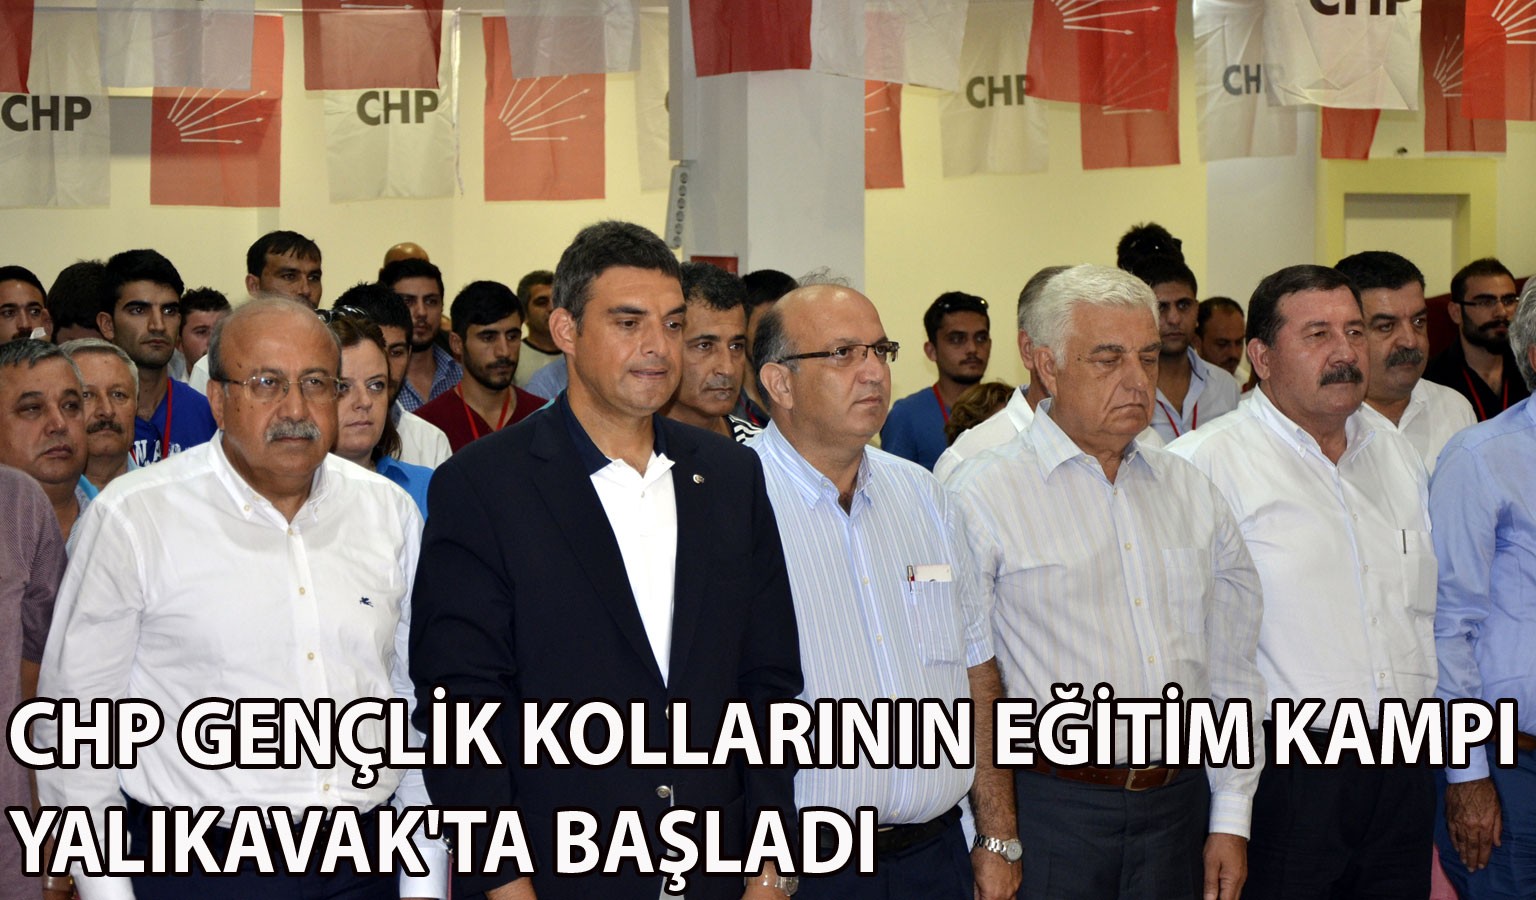 CHP GENÇLİK KOLLARI EĞİTİM KAMPINDA